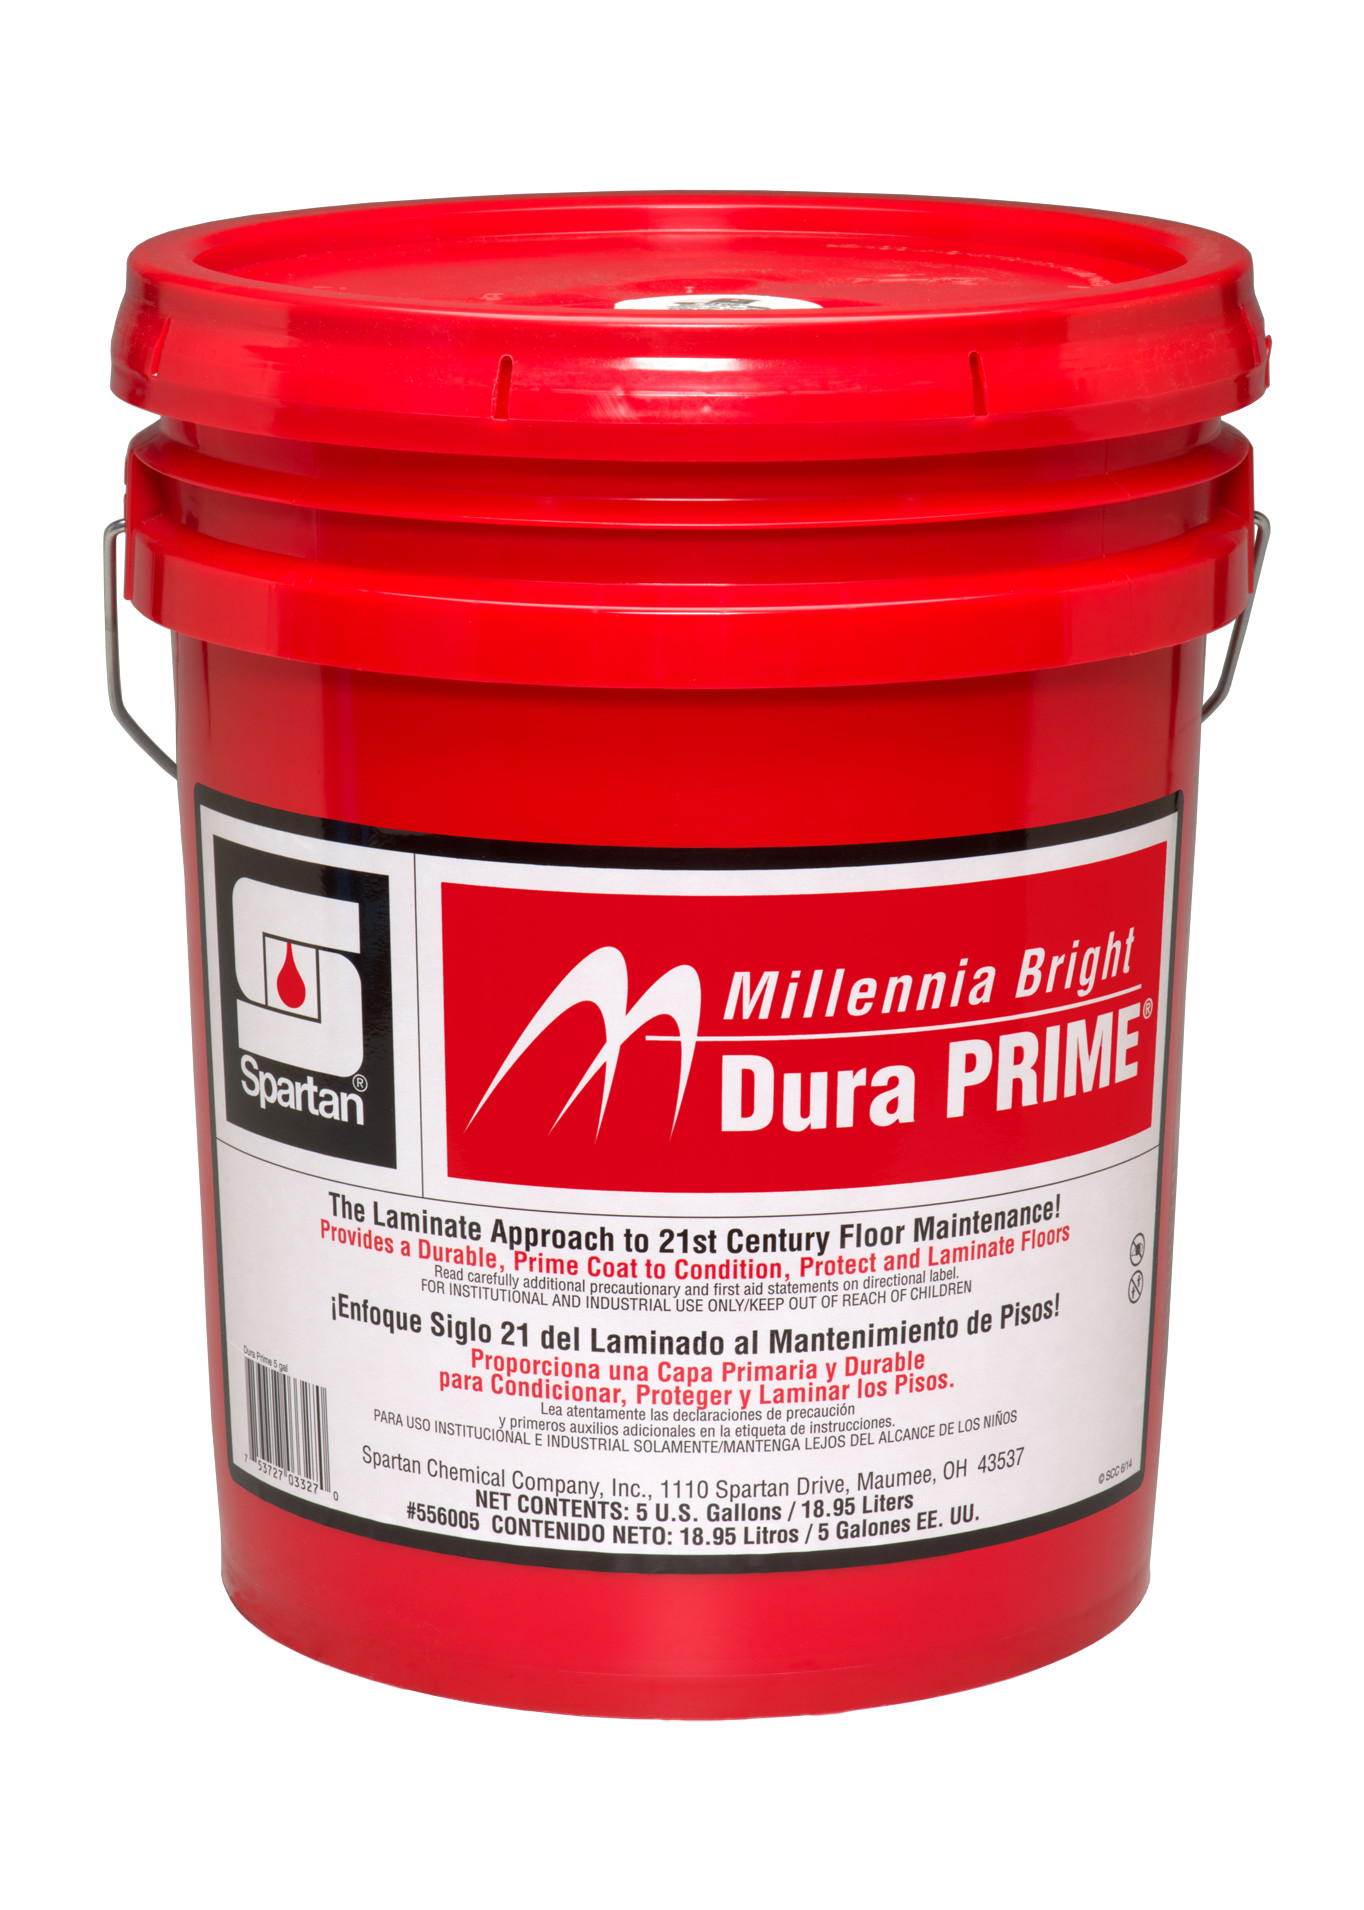 Spartan Chemical Company Millennia Bright Dura Prime, 5 GAL PAIL